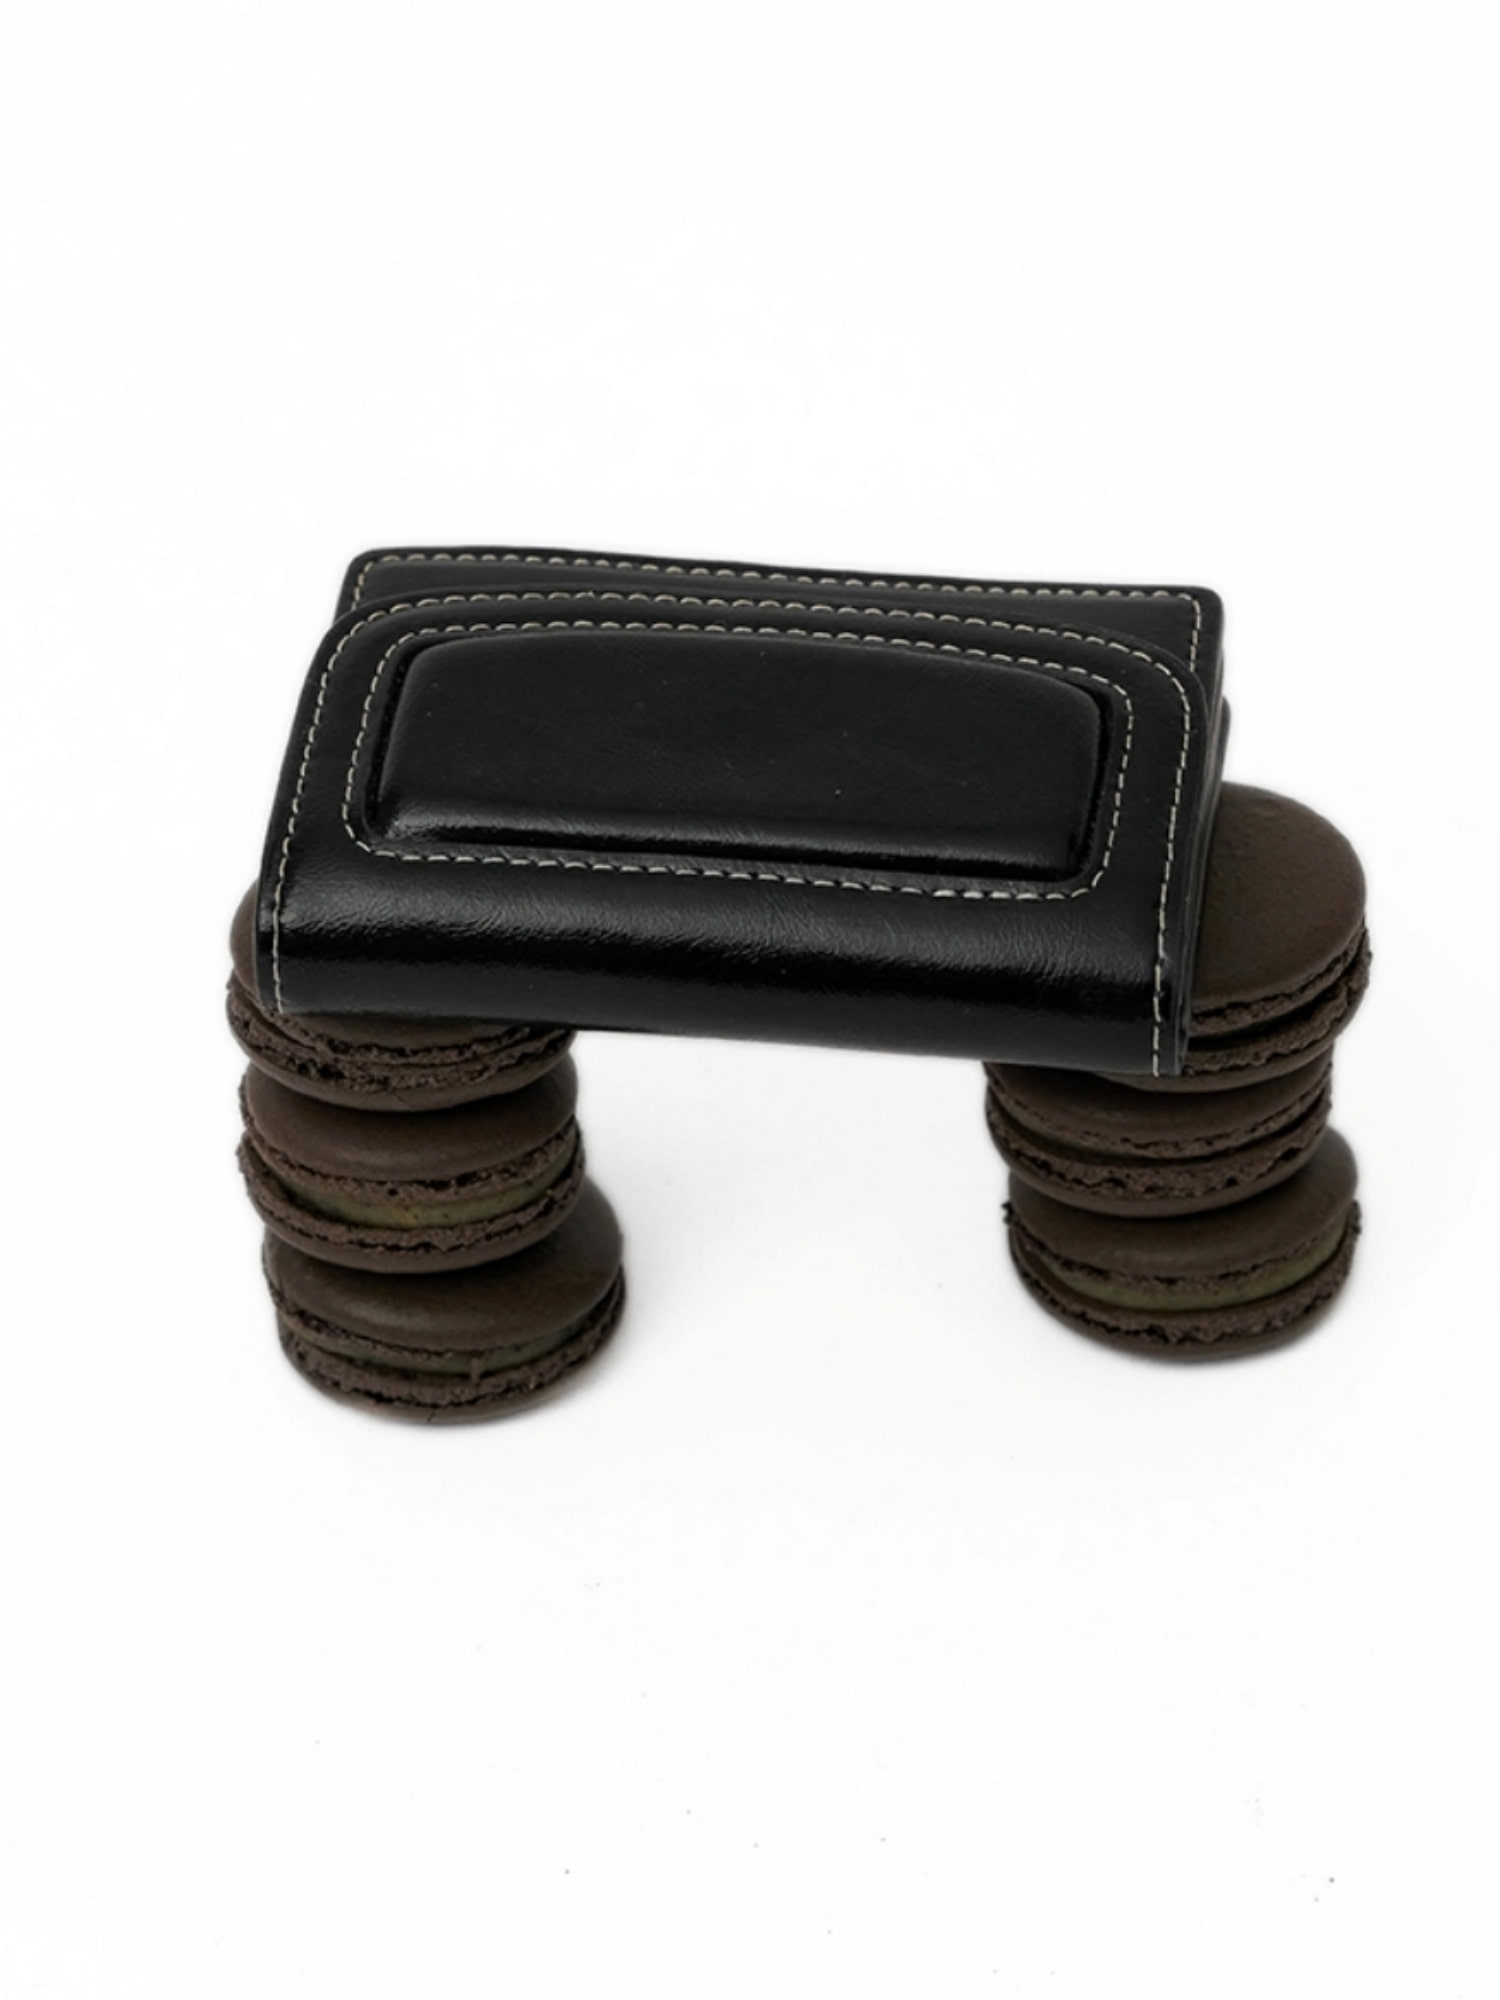 PALETTE Leather Card Case Wallet - Black